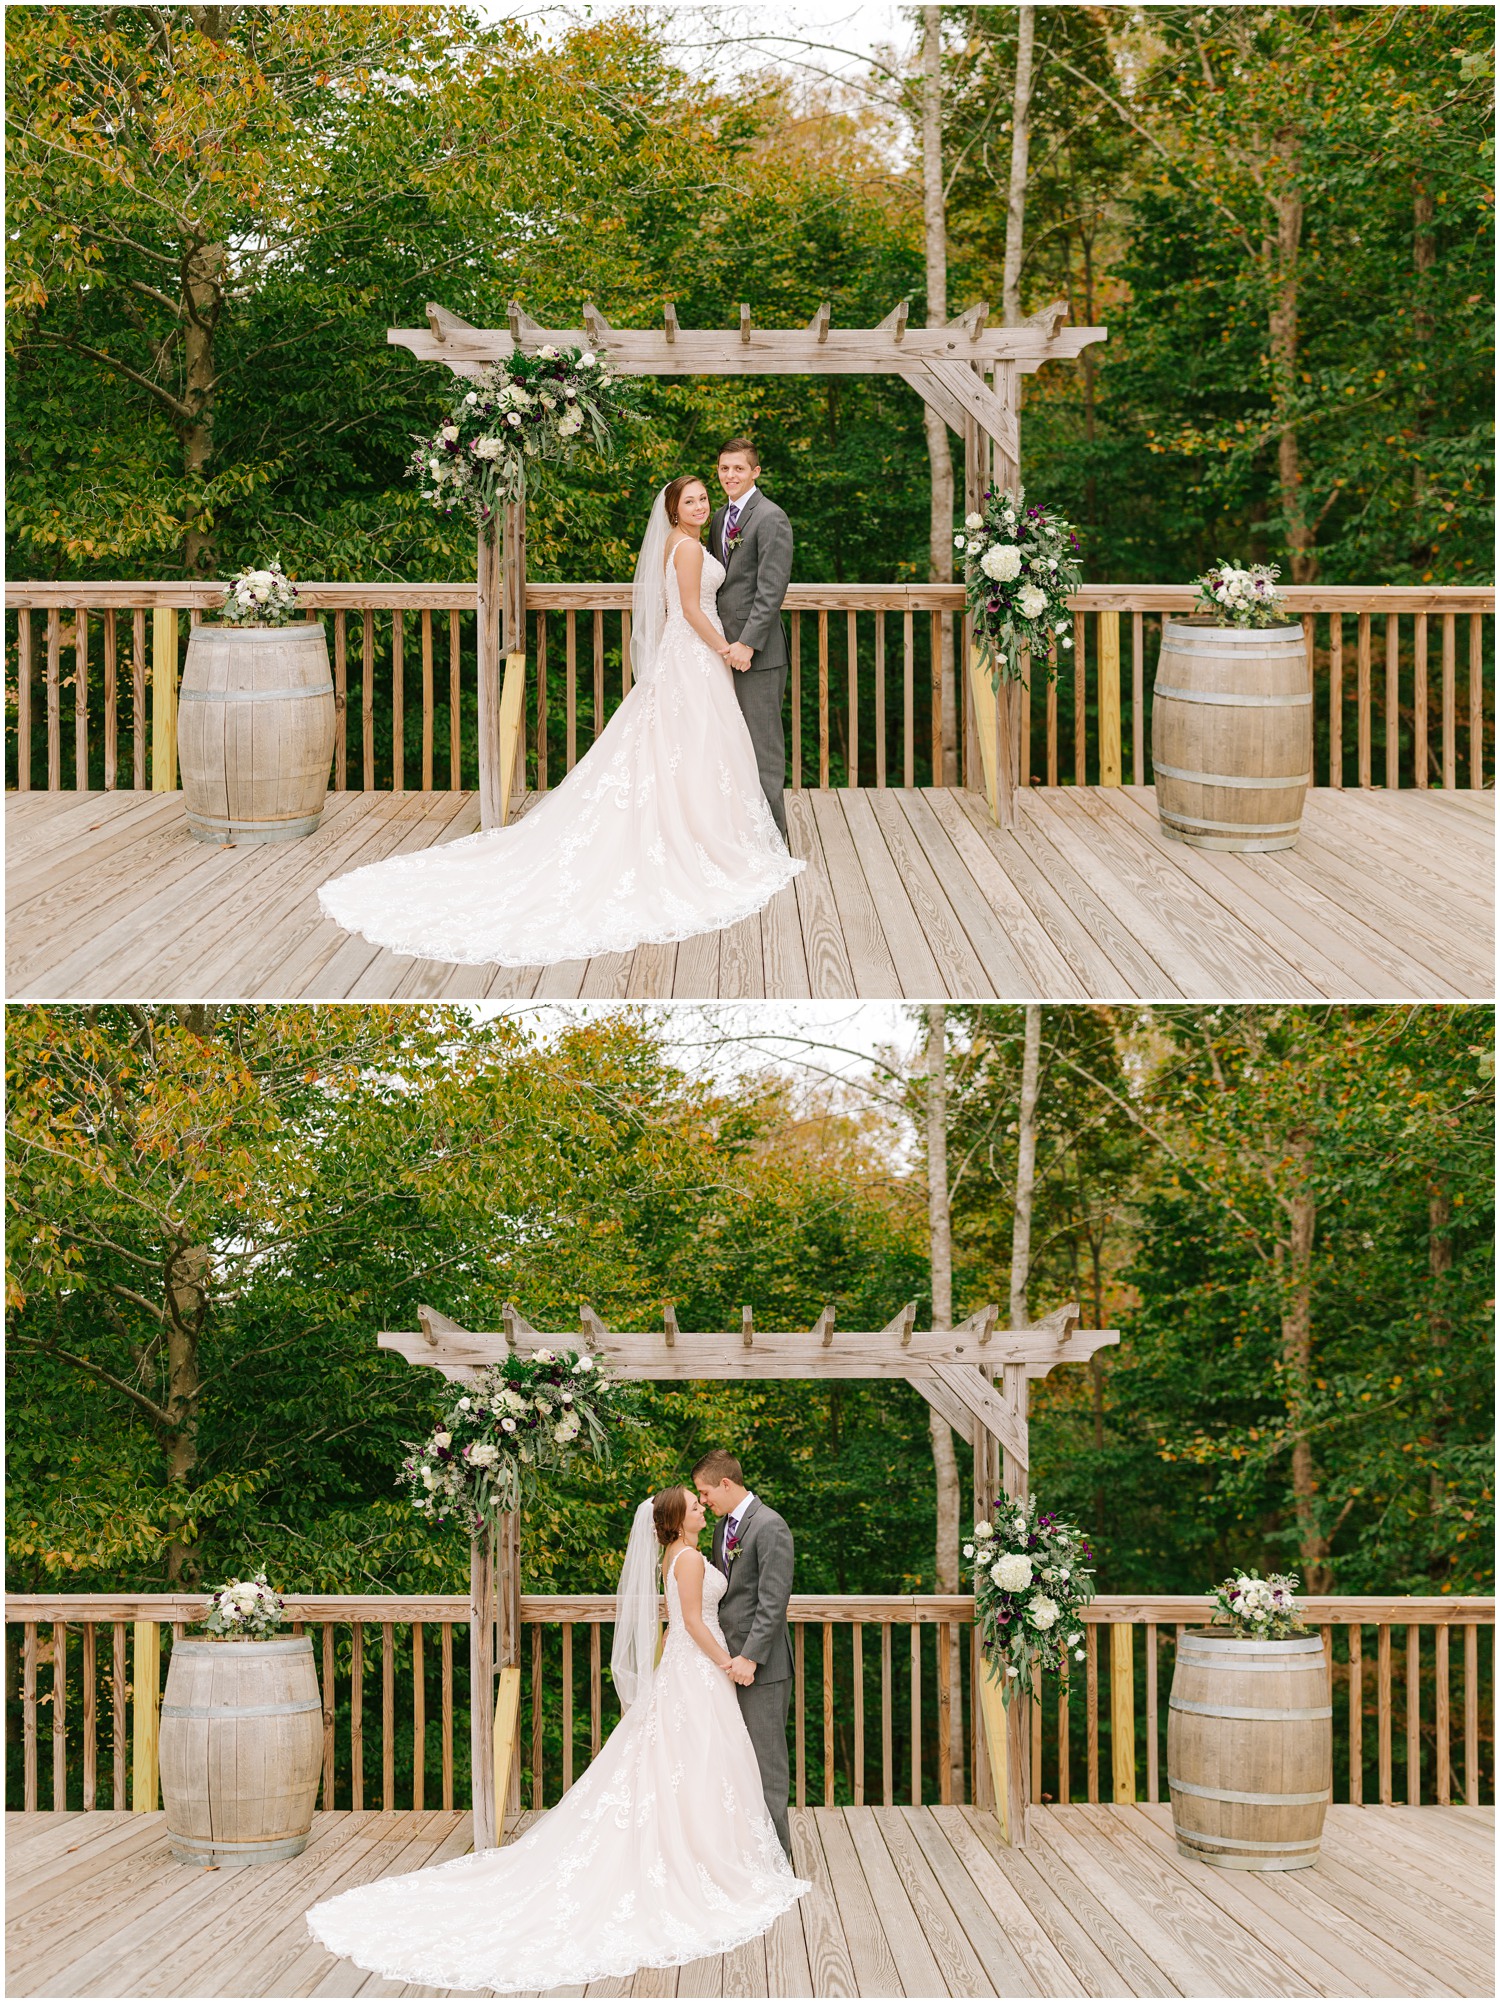 North Carolina wedding portraits under wooden arbor